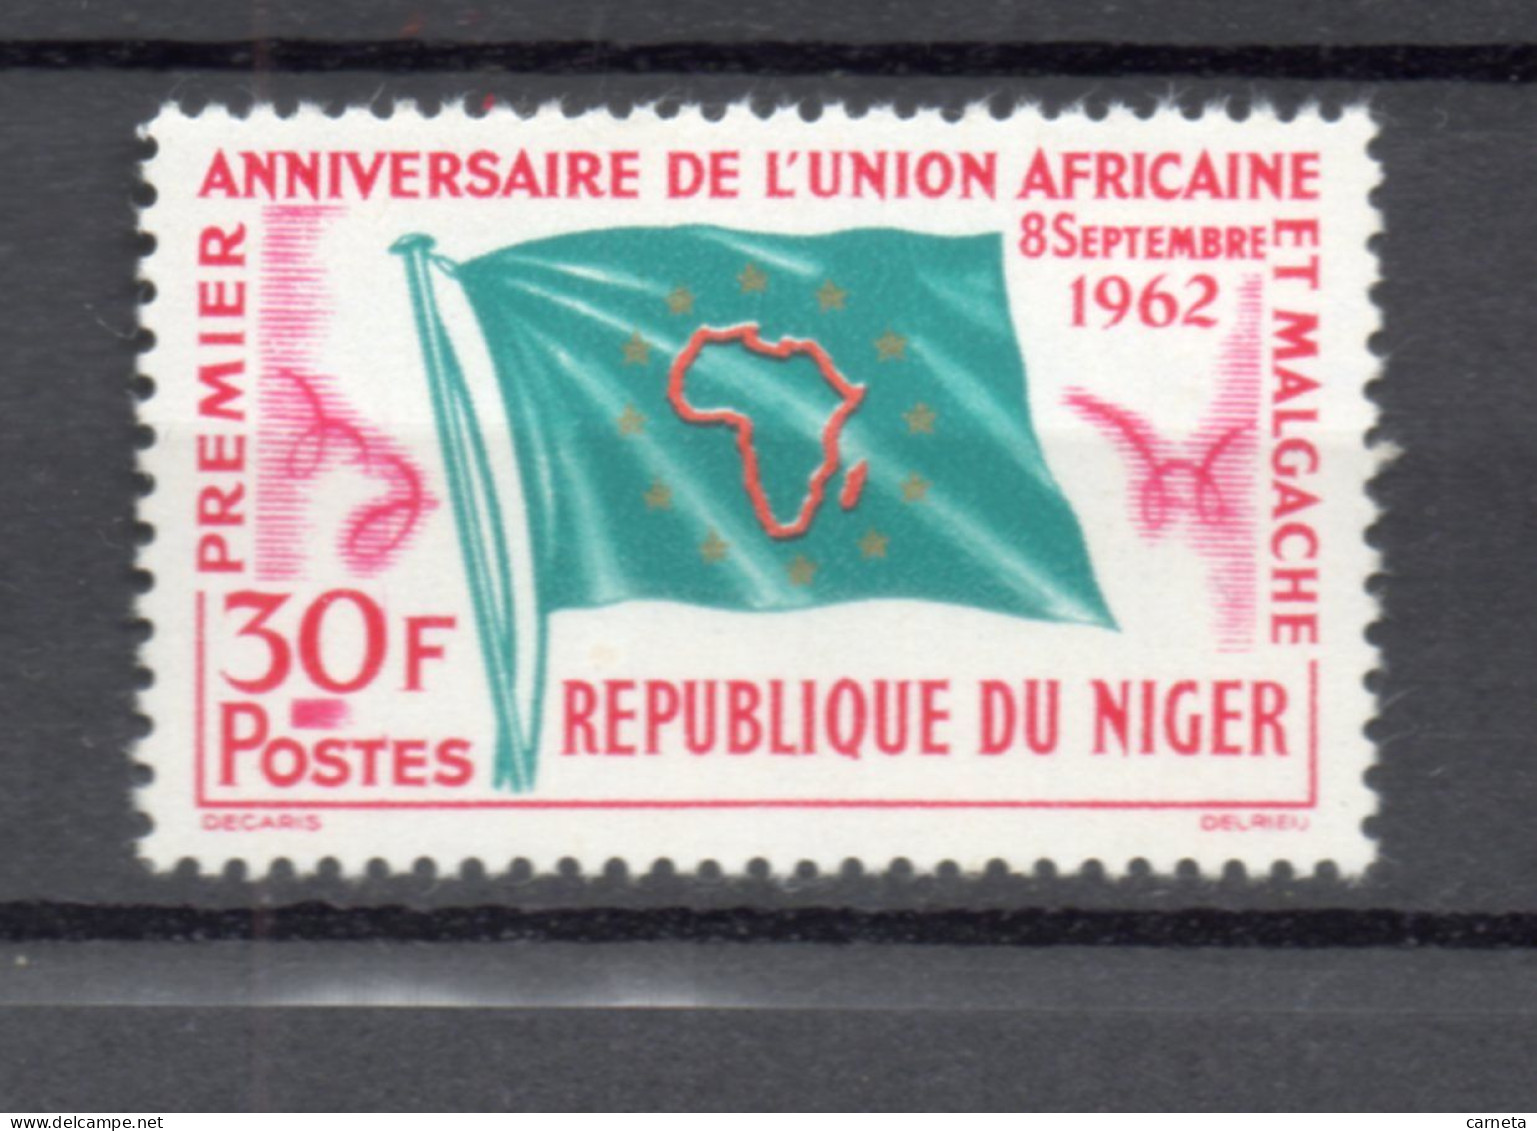 NIGER   N° 117    NEUF SANS CHARNIERE  COTE 1.20€    DRAPEAU UNION AFRICAINE - Niger (1960-...)